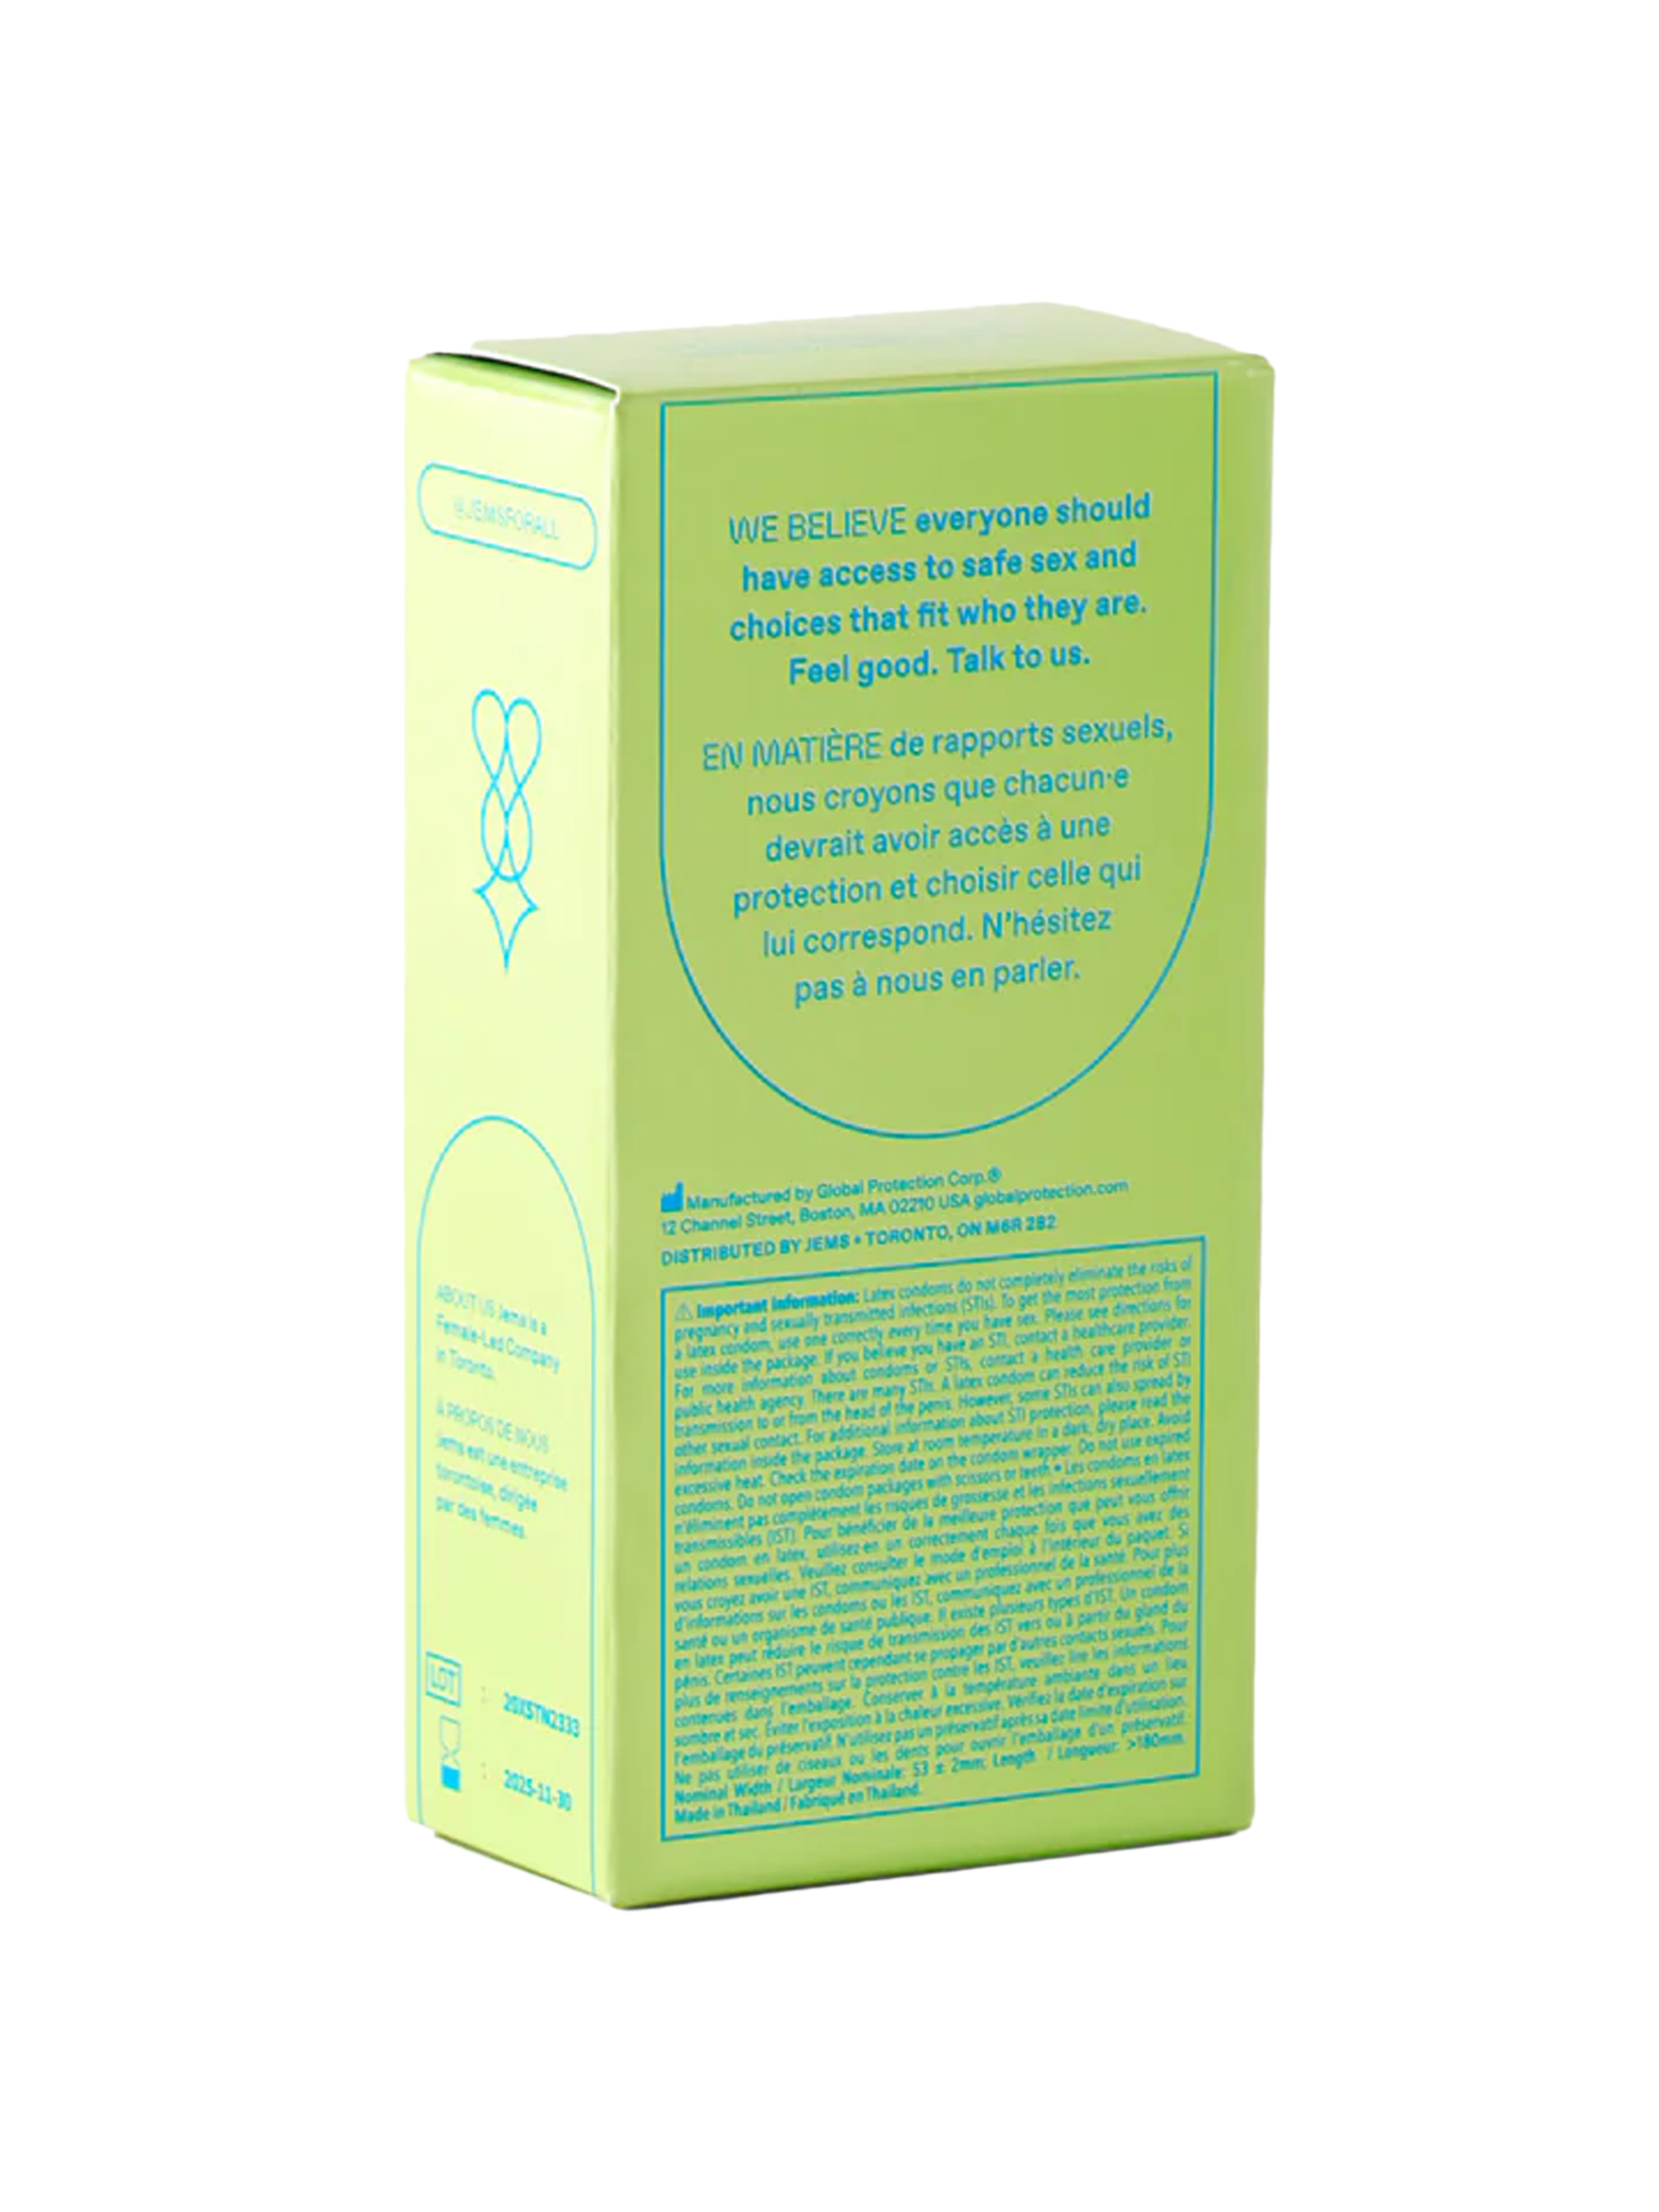 Jems Latex Condoms 12 Pack back of box